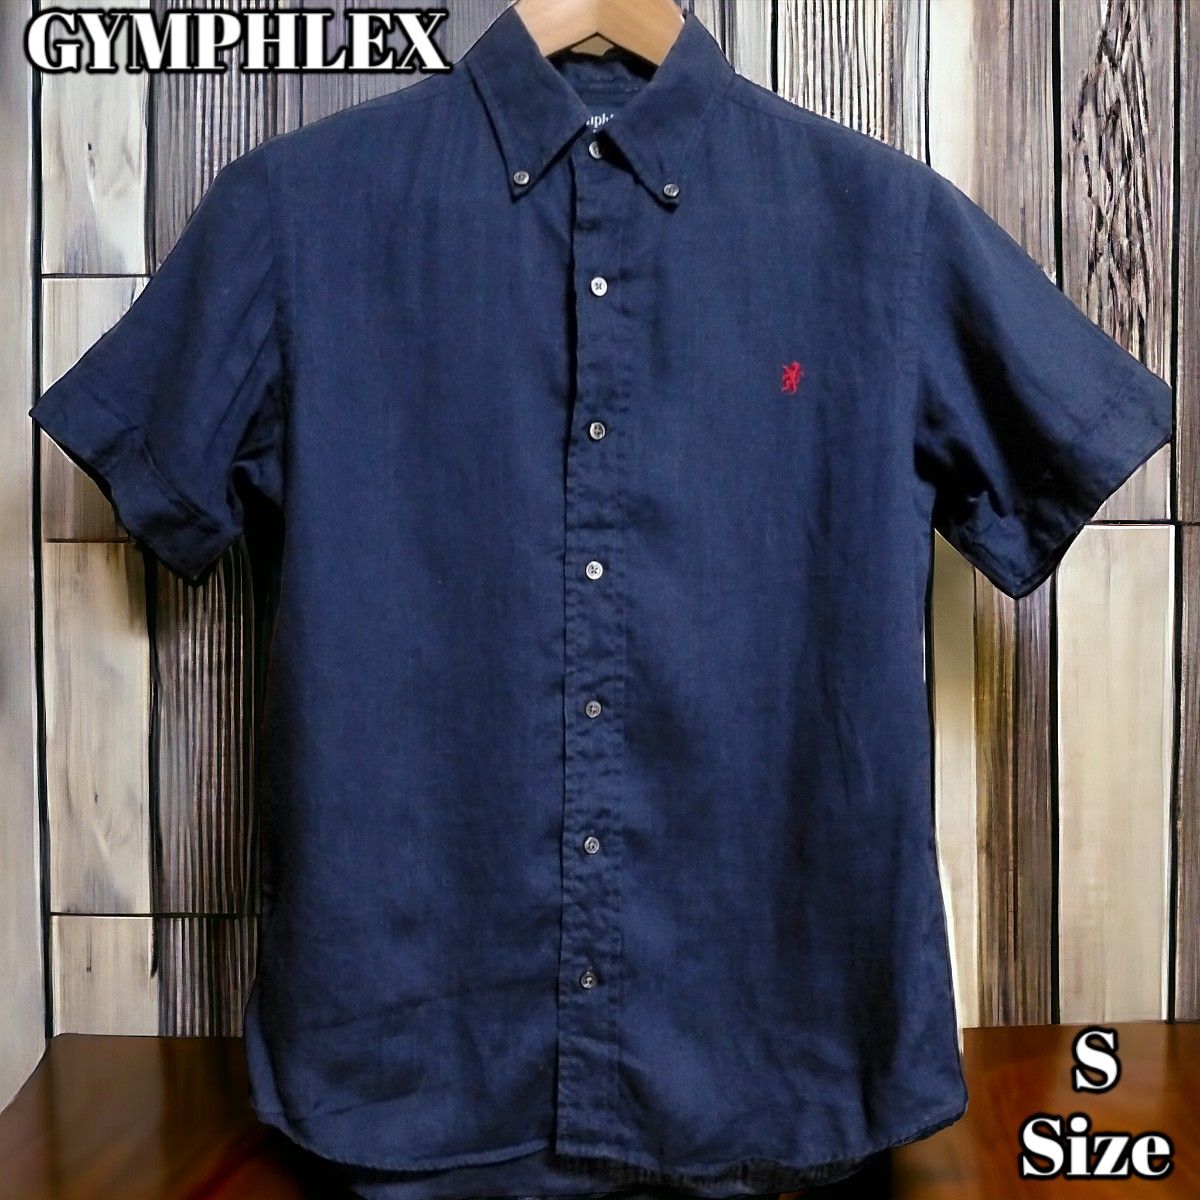 GYMPHLEX リネン100% ボタンダウンシャツ ネイビー 半袖 Sサイズ